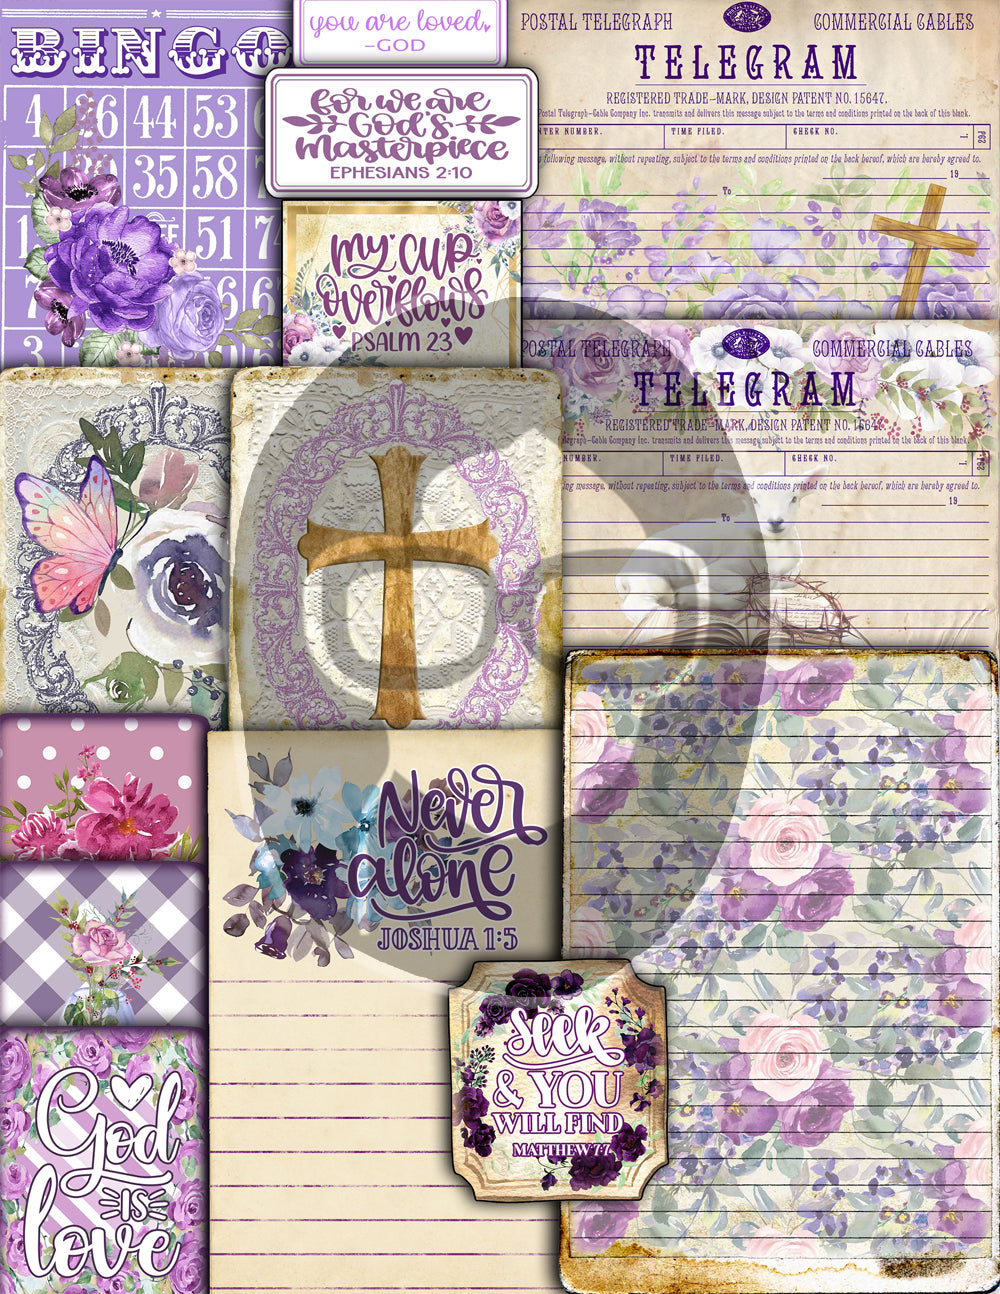 Faith Junk Journal Kit, Scripture Ephemera, Purple Junk Journal Kit-40pg Digital Download- Religious Cards, Prayer Quotes, Bible Verse Cards